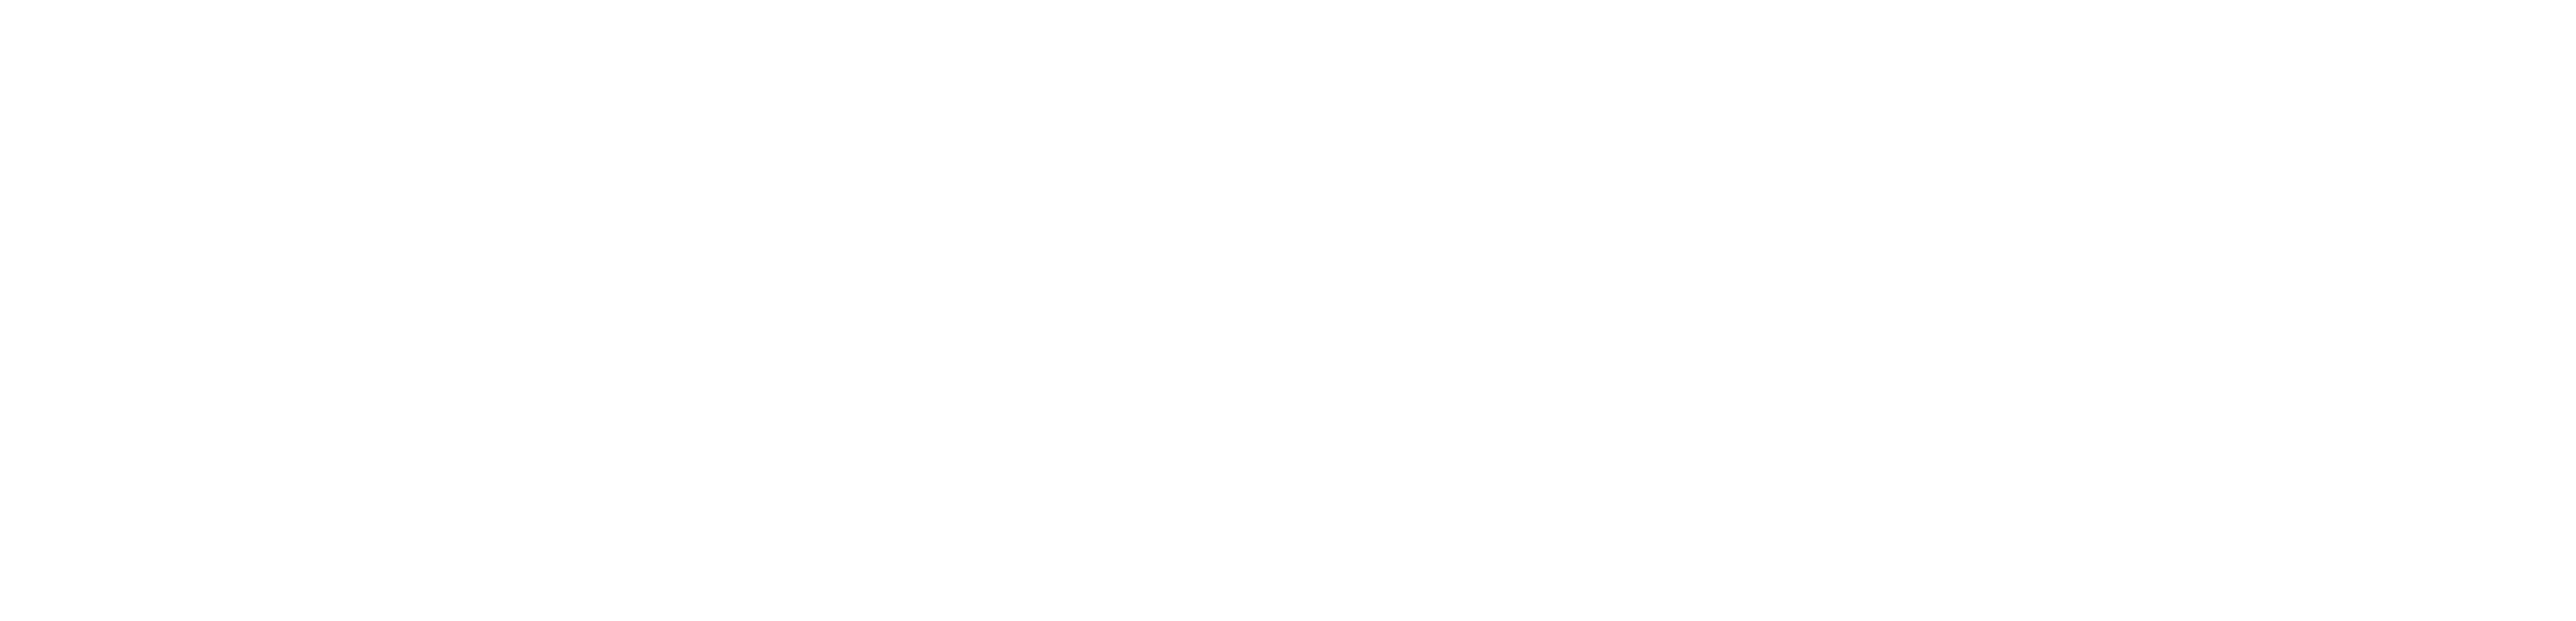 Jumpstart B2B Marketing Agency